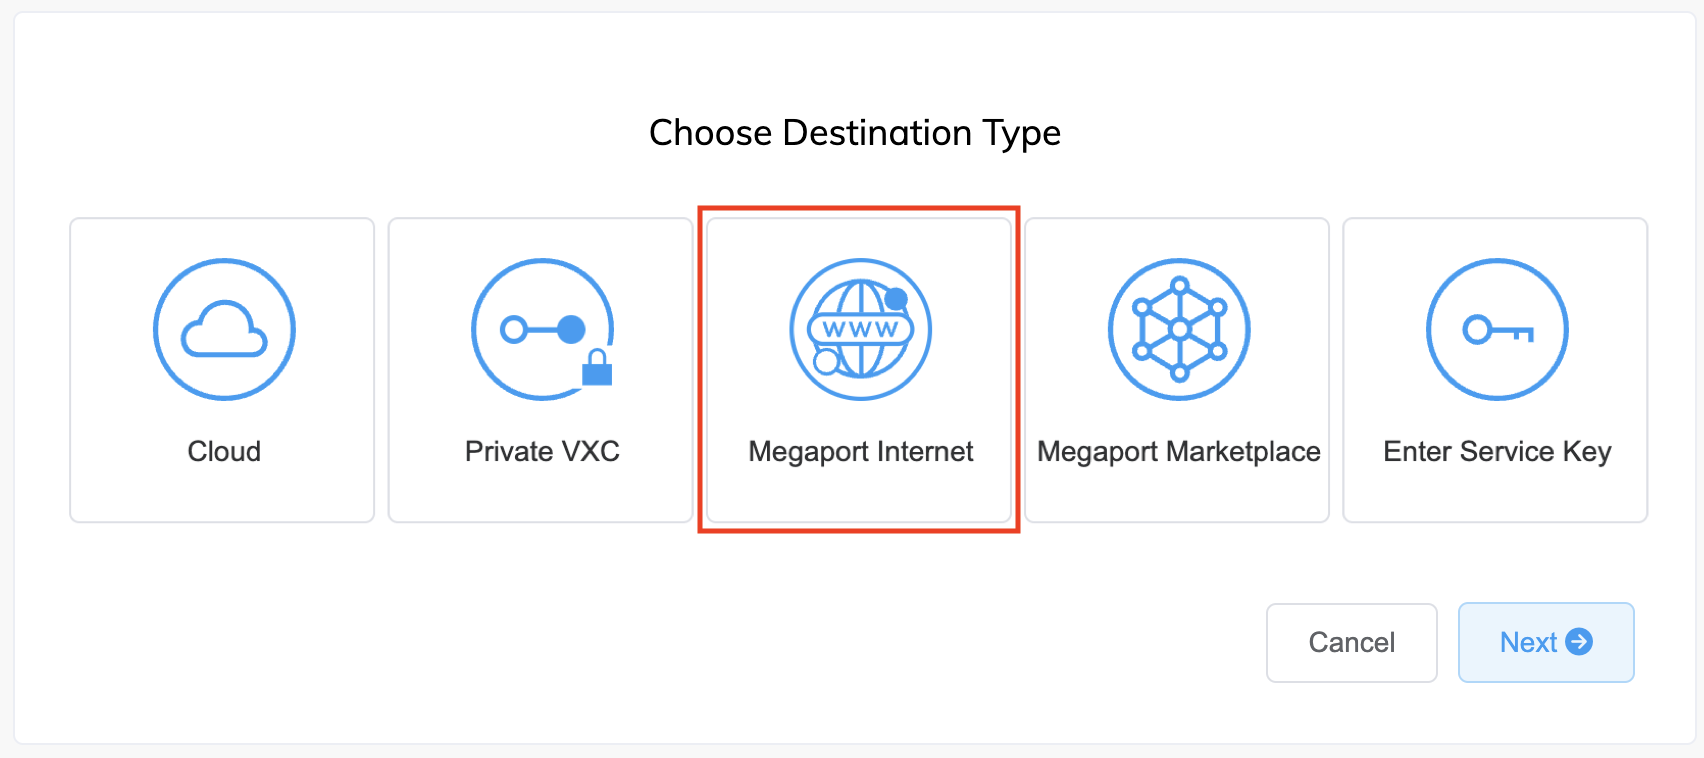 Megaport Internet connection